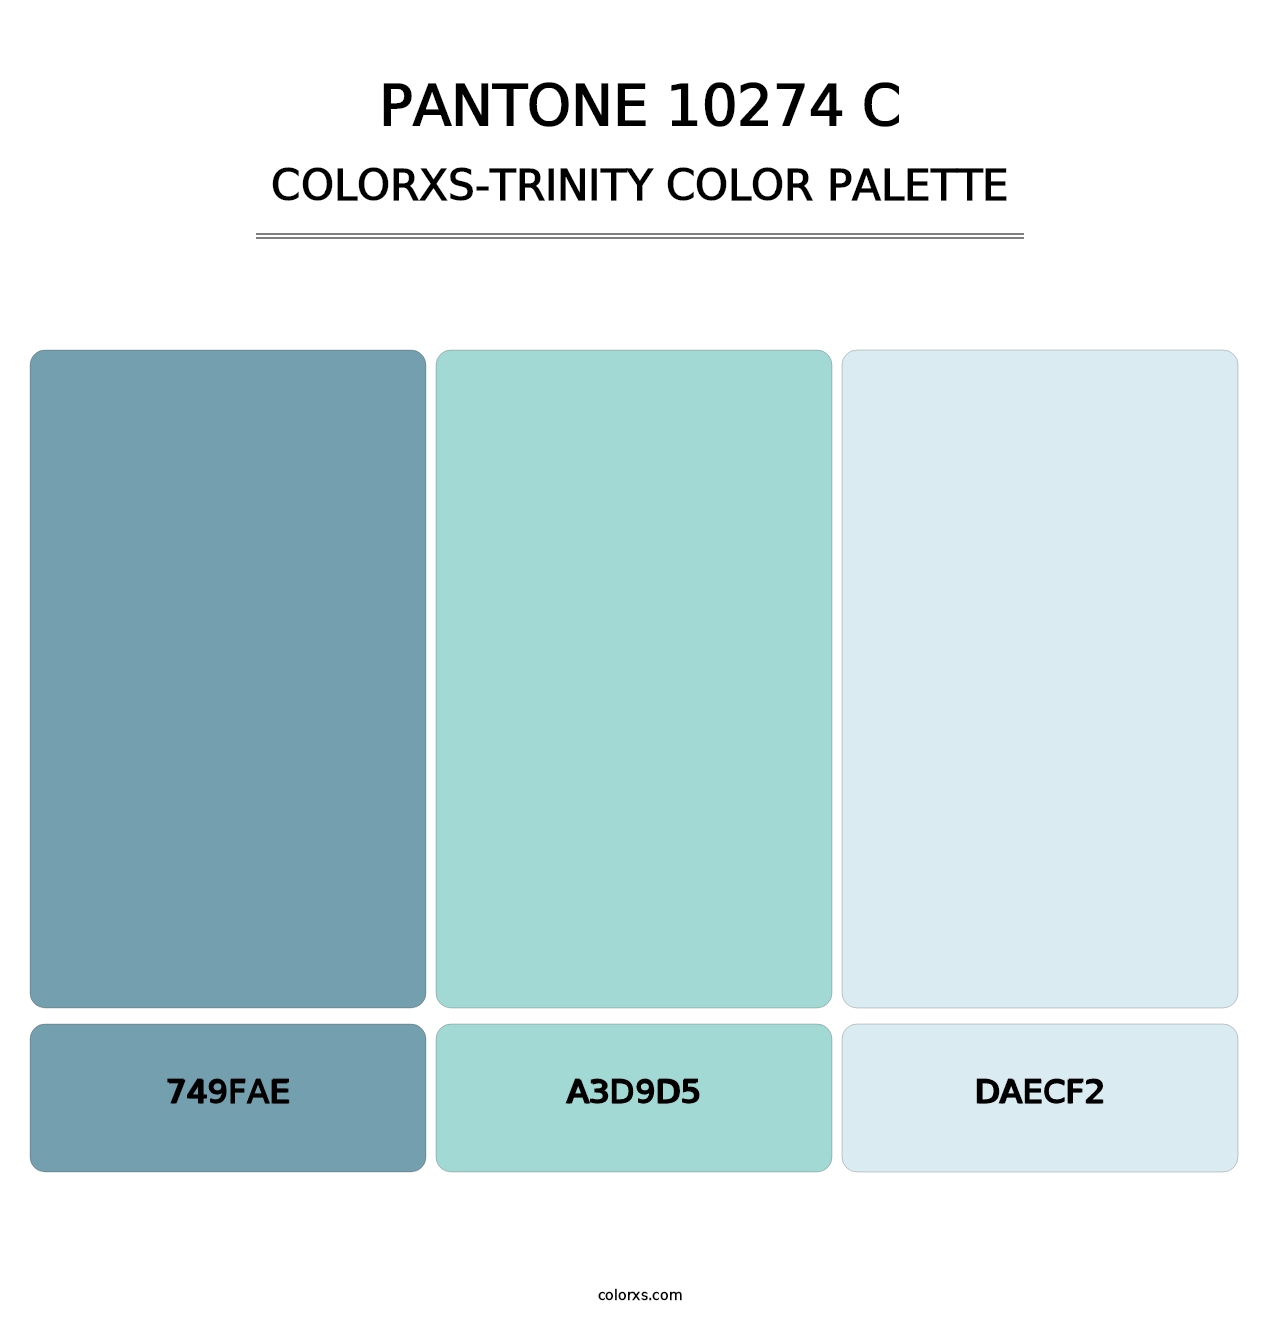 PANTONE 10274 C - Colorxs Trinity Palette